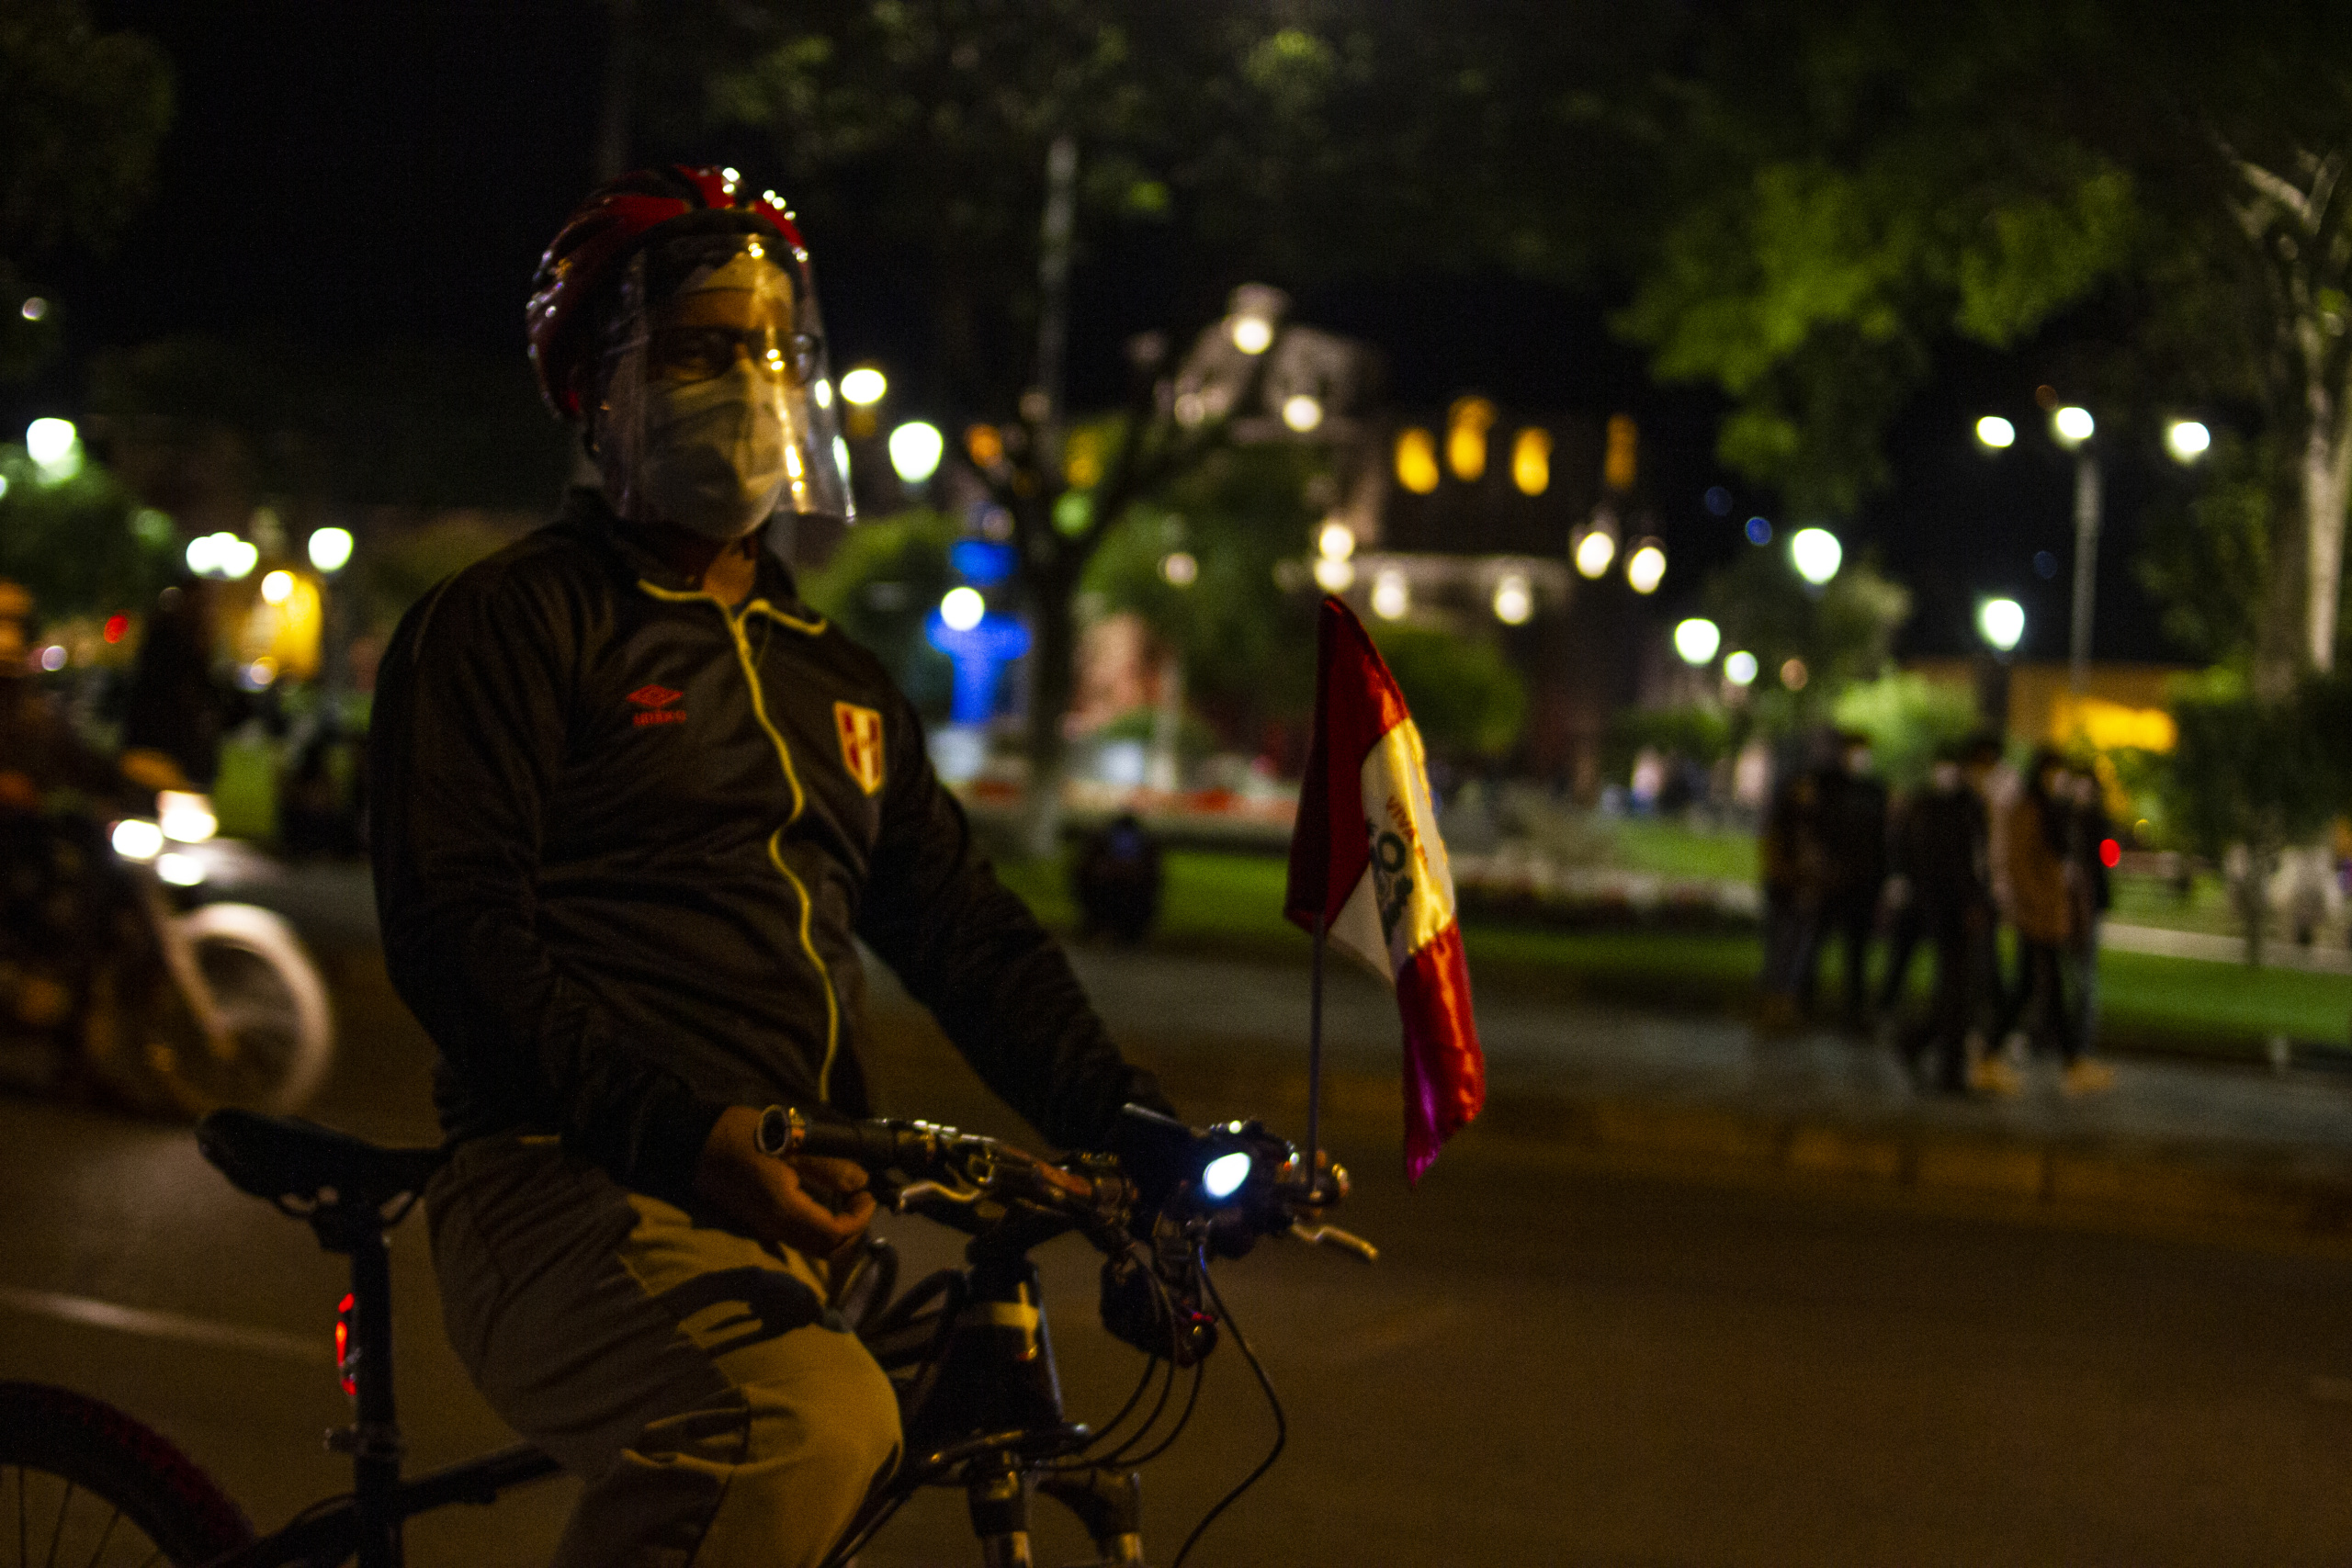 Protestors on bikes Irma Cabrera Abanto